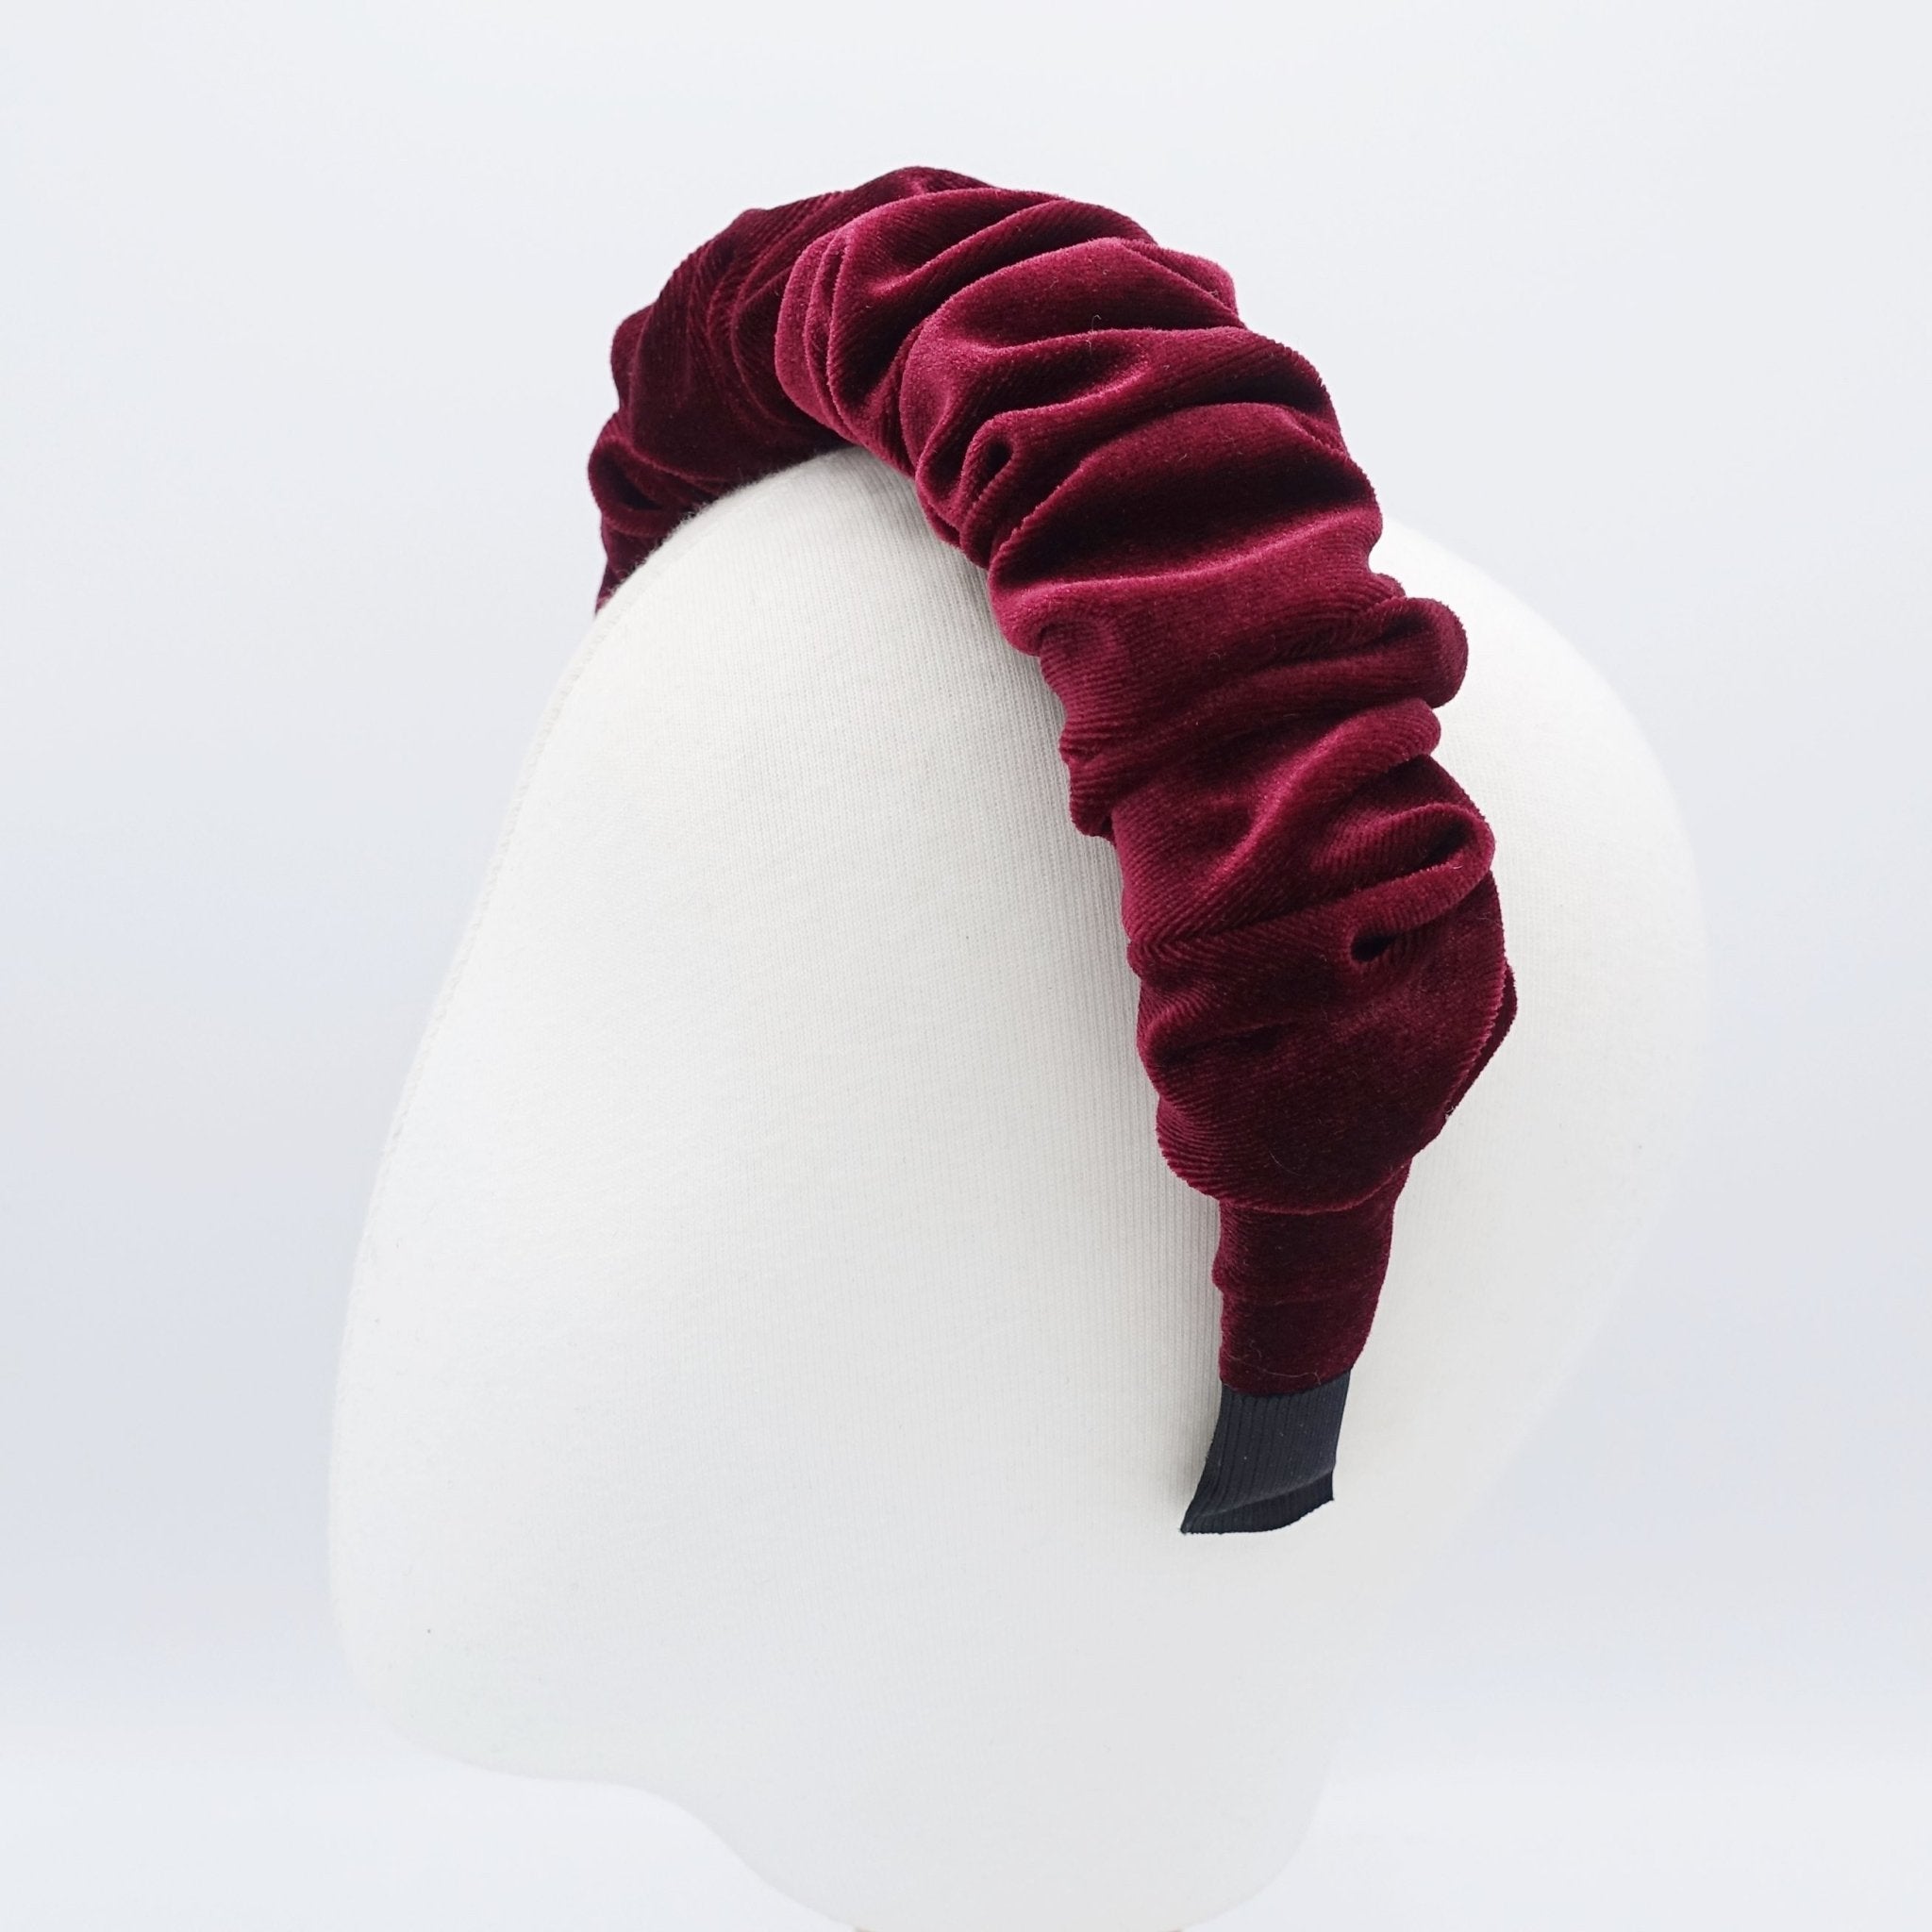 veryshine.com hairband/headband Red wine velvet padded and pleated headband stylish hairband hair accessory for women